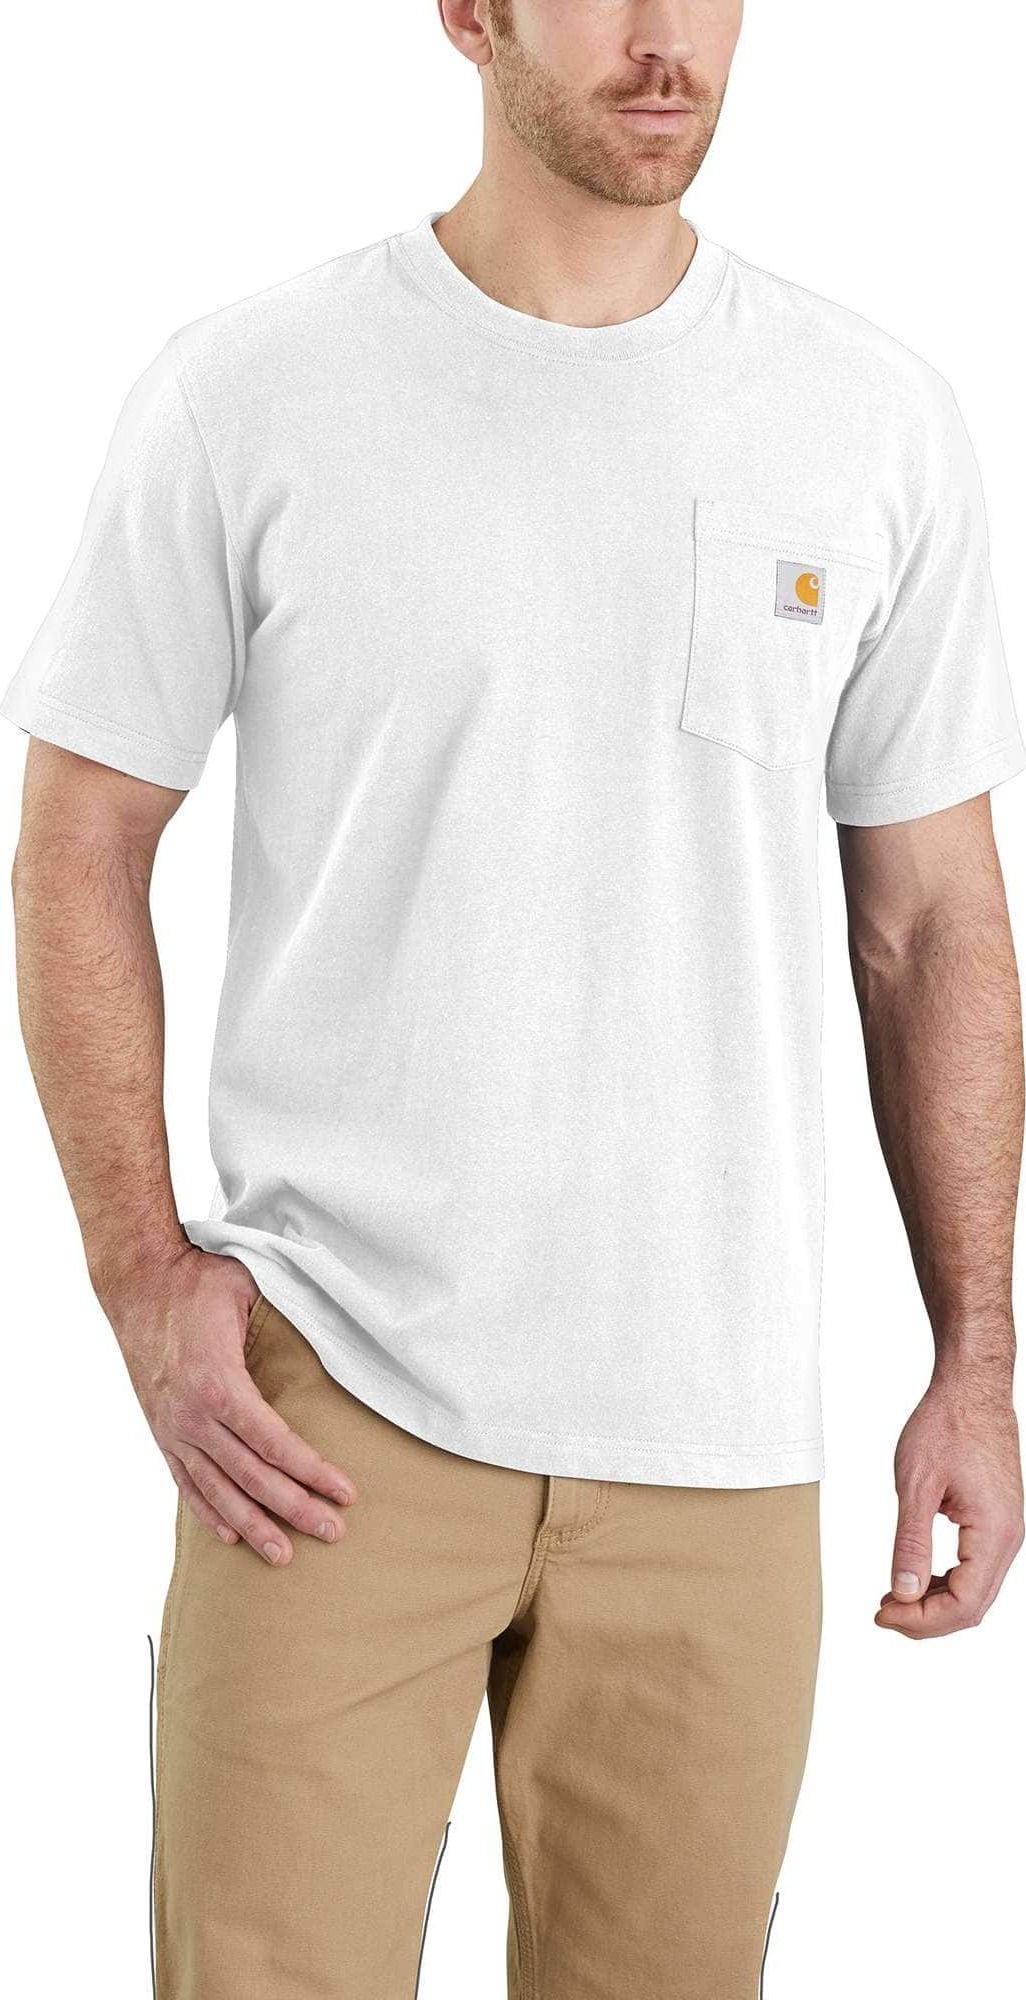 Carhartt Men's Workwear Pocket S/S T-Shirt White